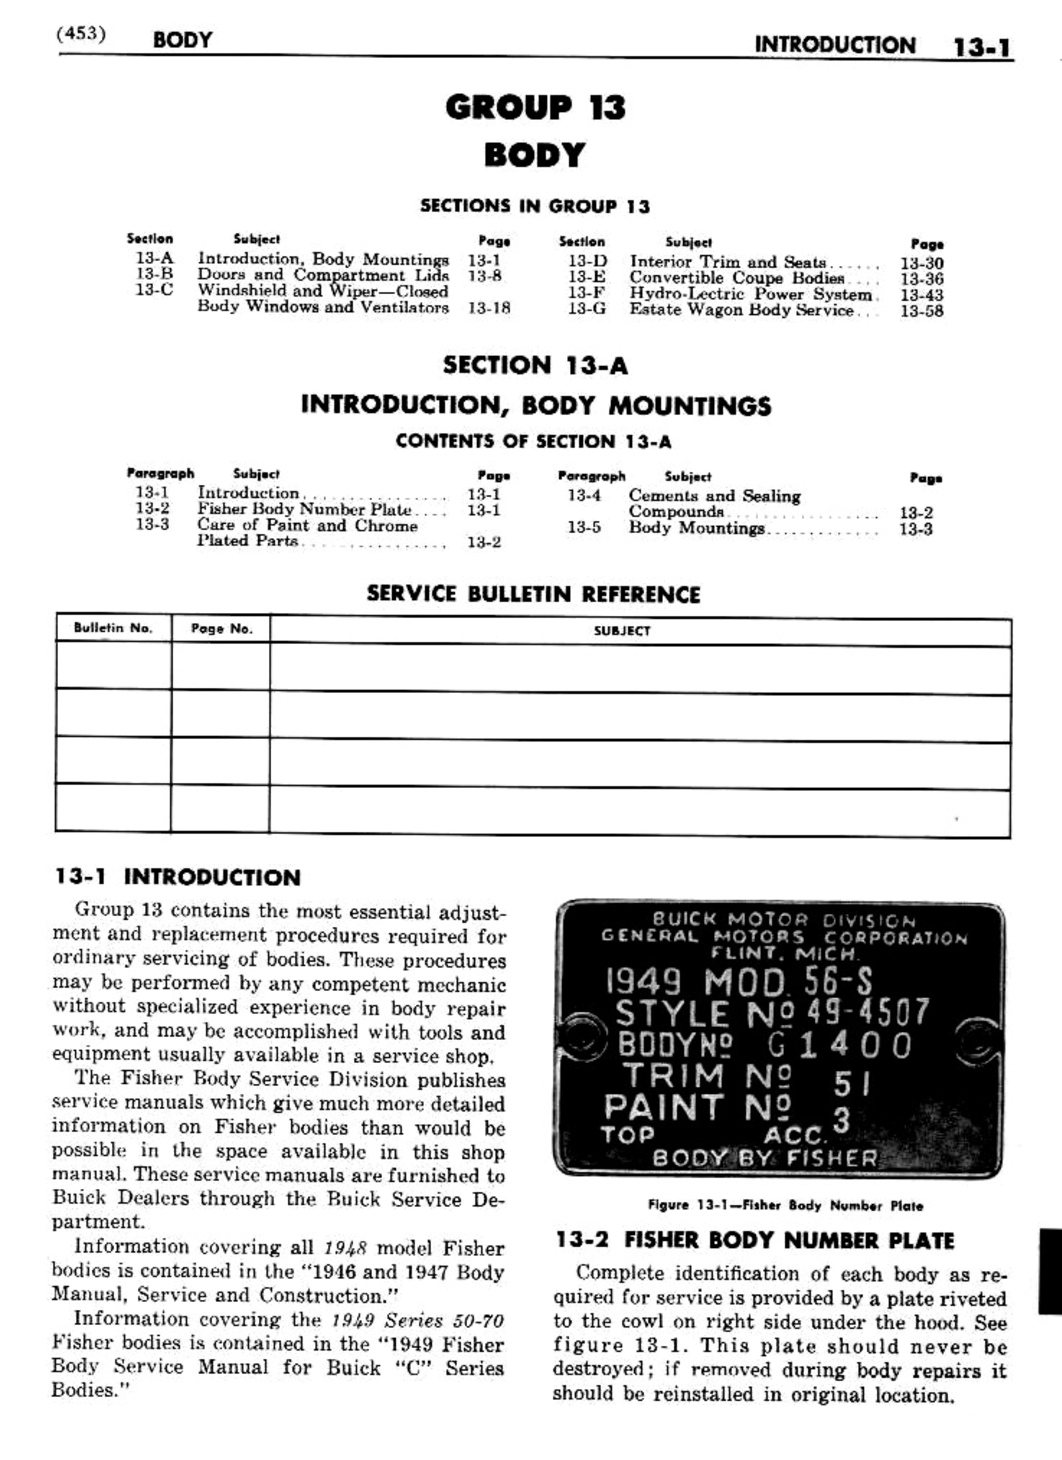 n_14 1948 Buick Shop Manual - Body-001-001.jpg